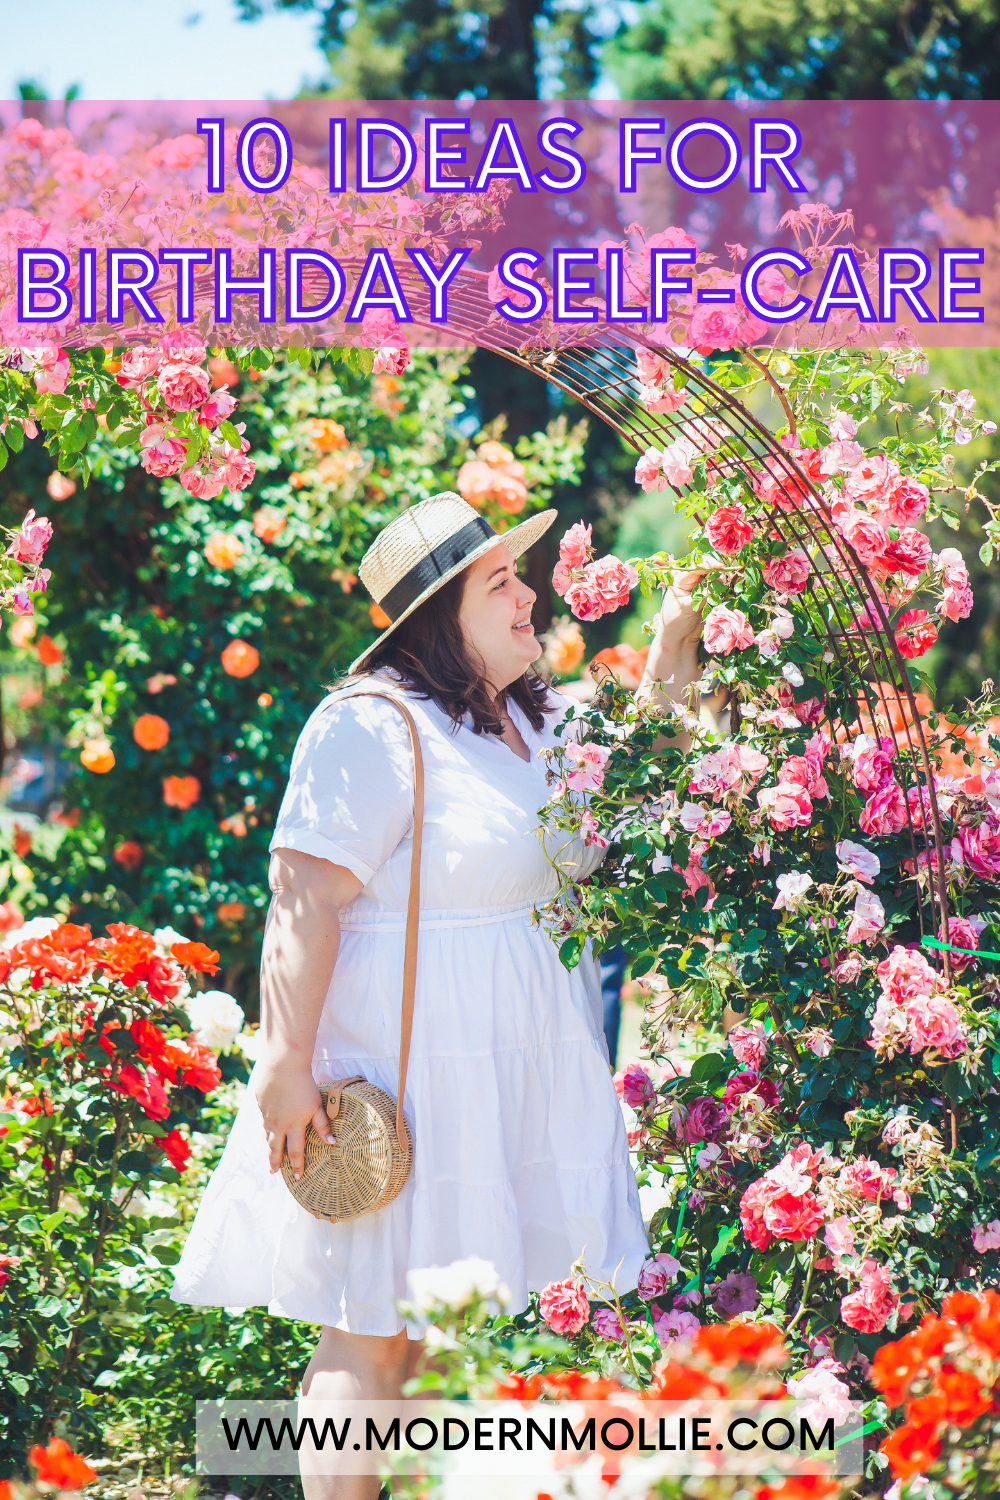 10 Ideas For Birthday Self-Care